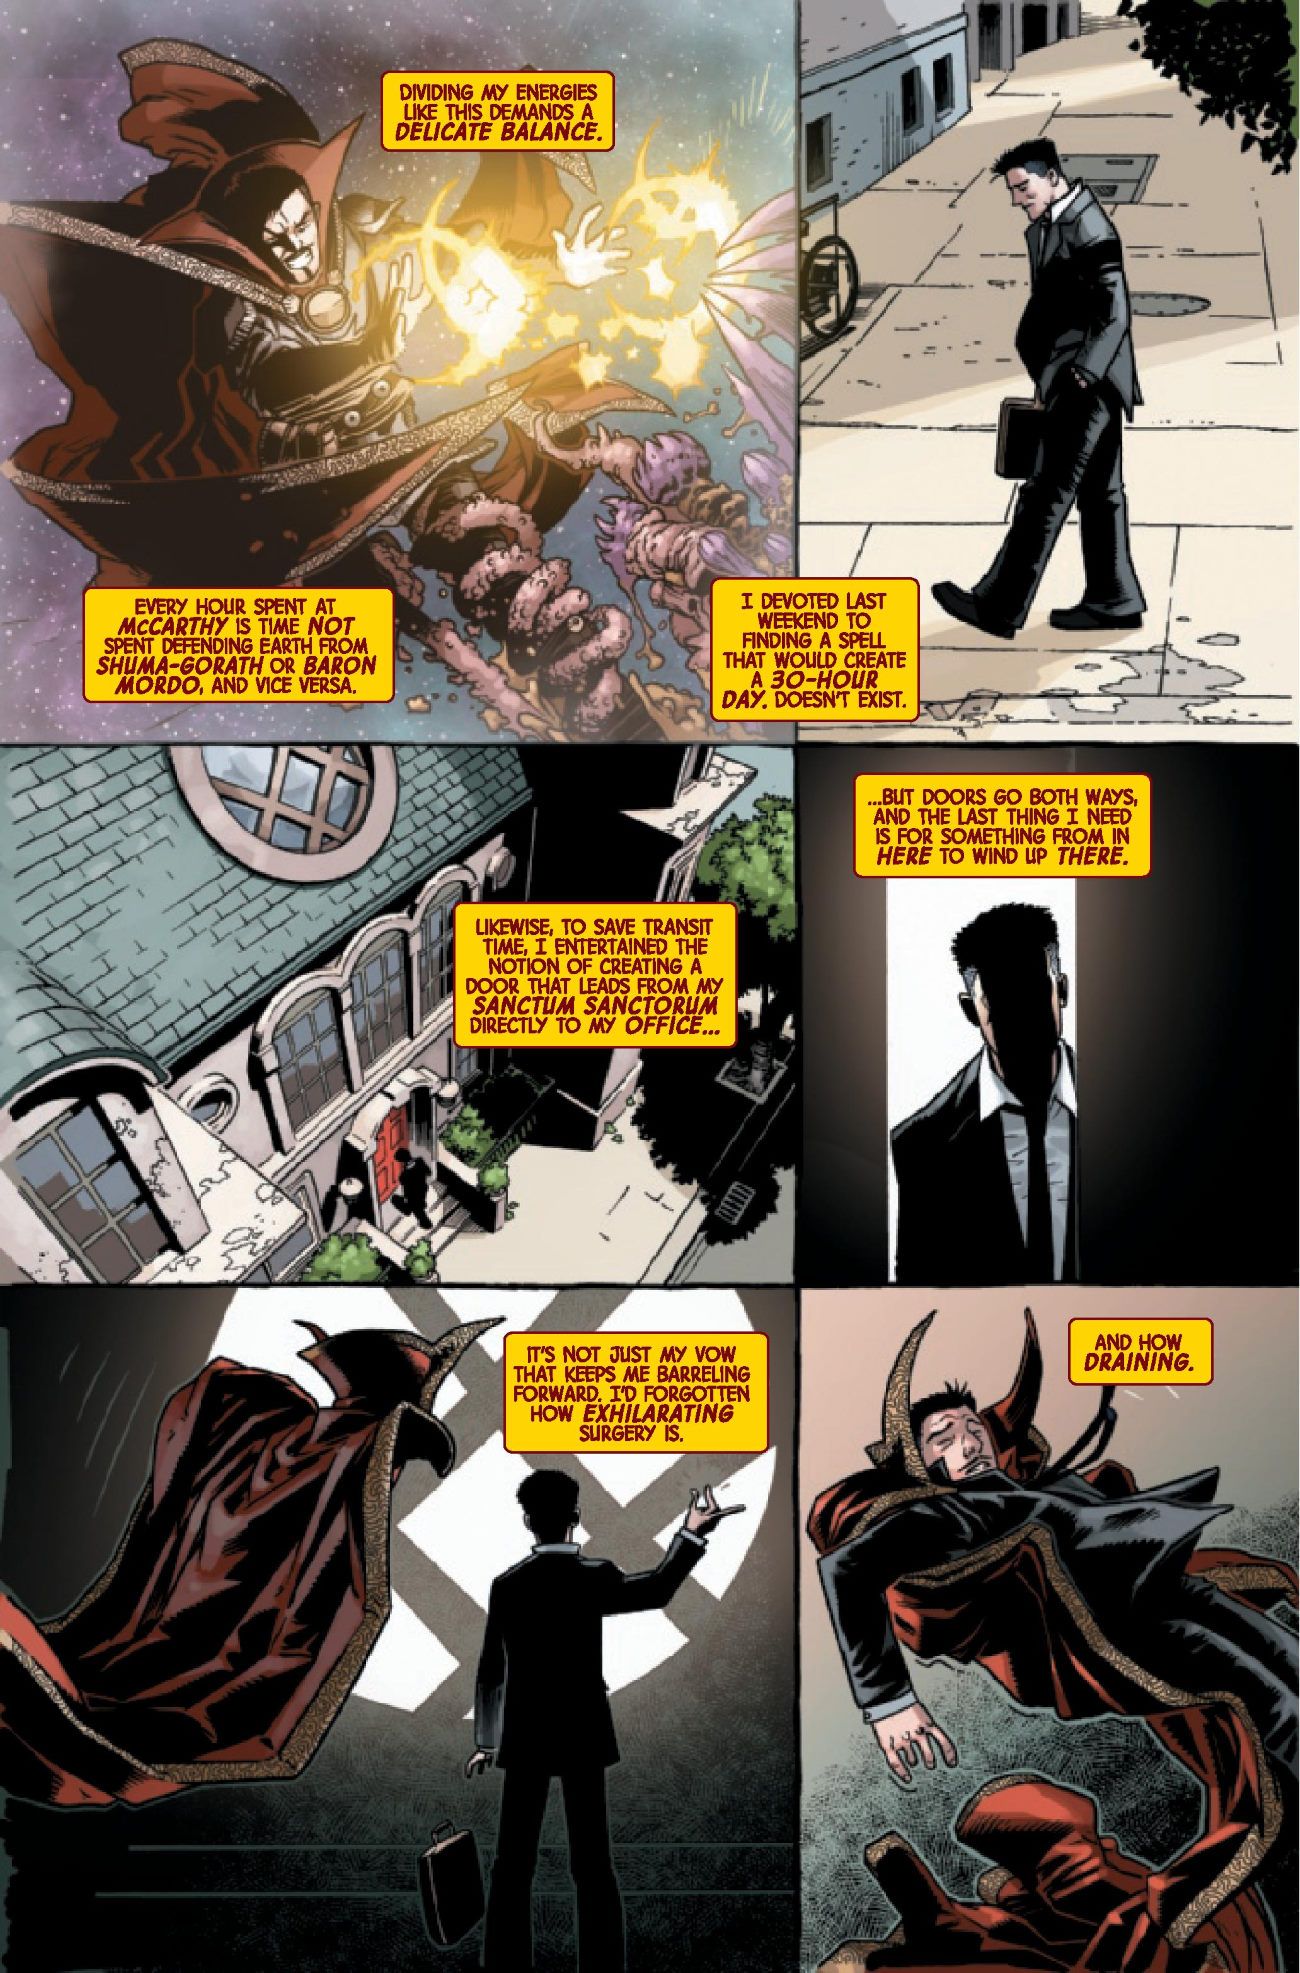 June 2020 DOCTOR Strange Surgeon Supreme #5 Marvel Comics #2P3 